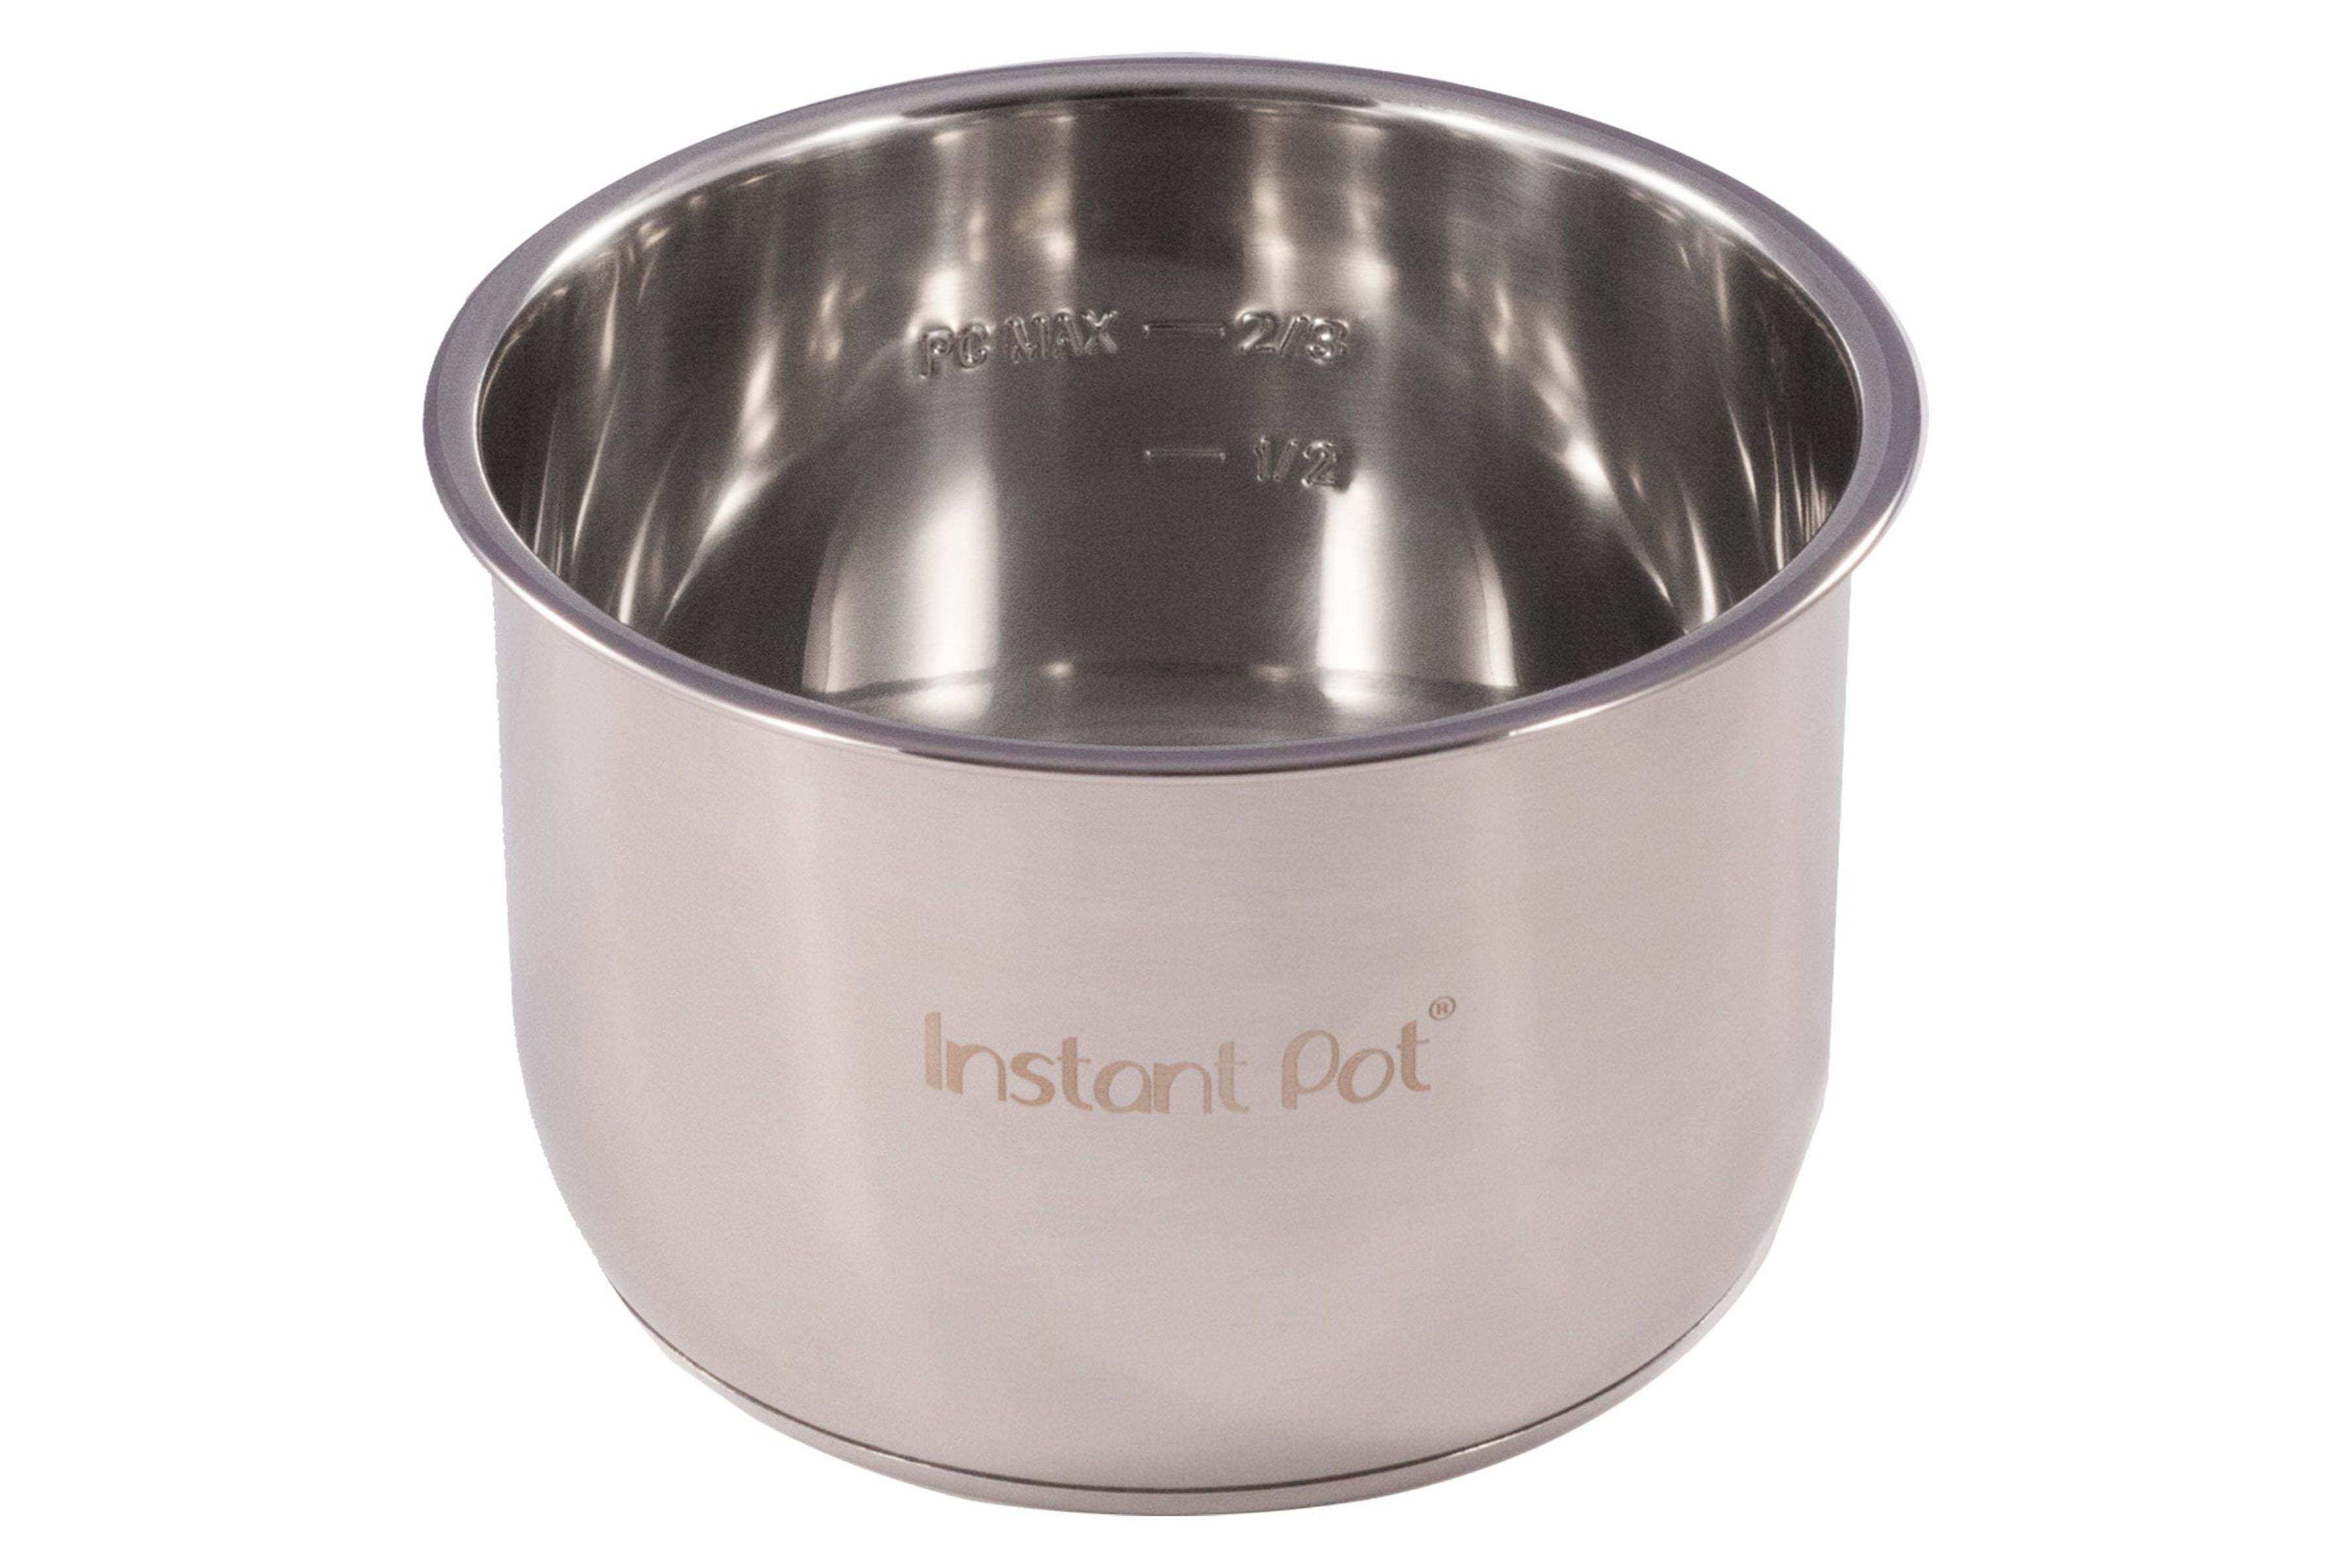 Instant Pot Inner Pot with 3-Ply Bottom, 6 Quart, Stainless Steel